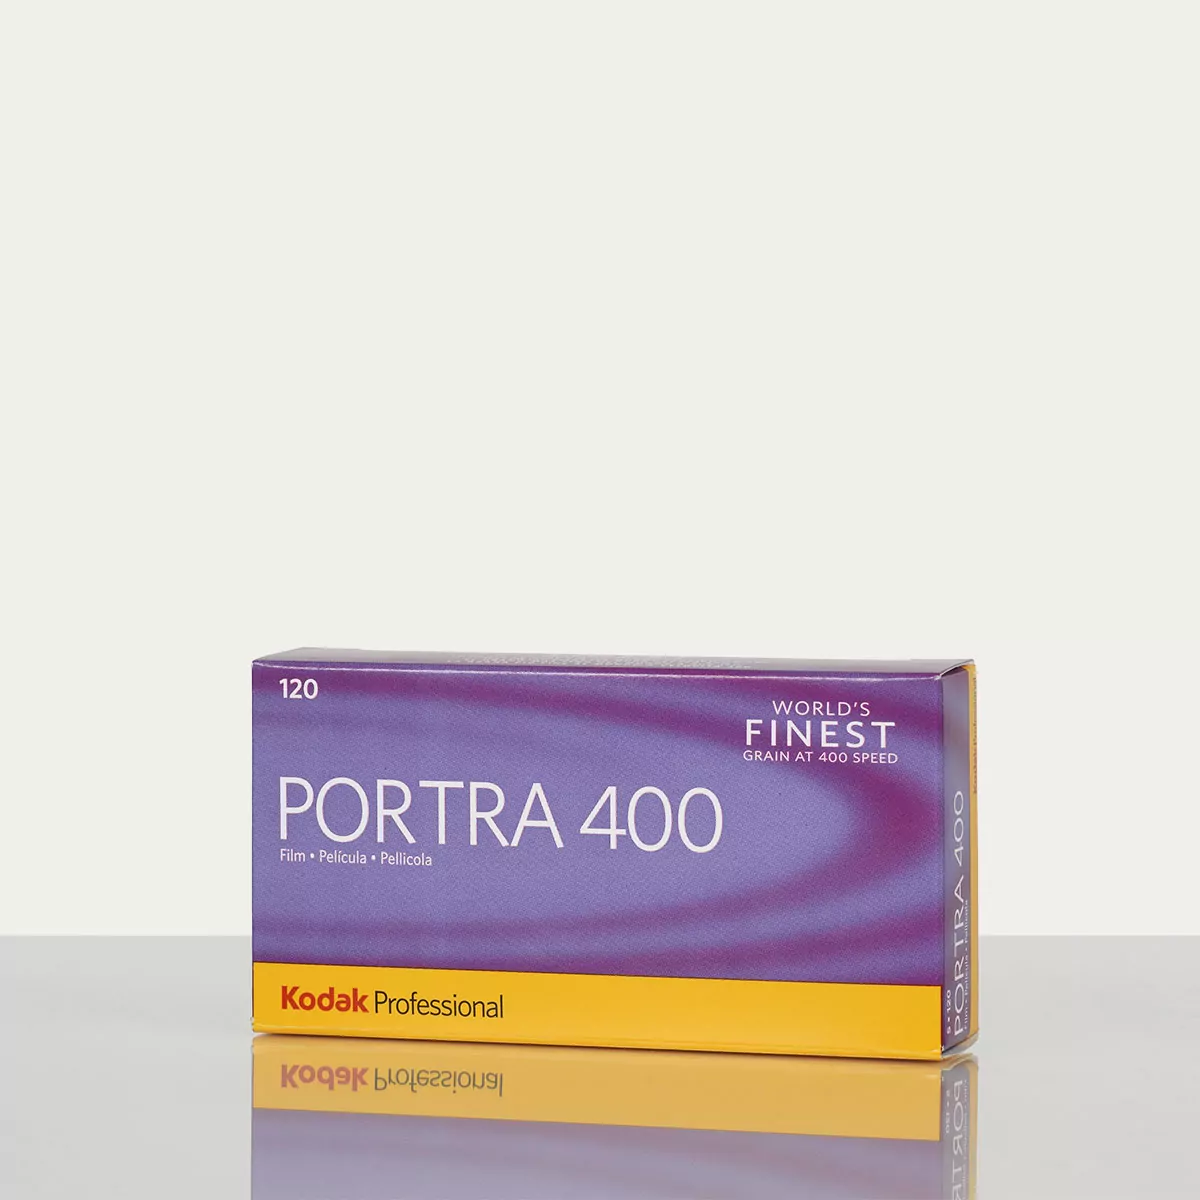 Kodak PORTRA 400 120 (5 Pack)